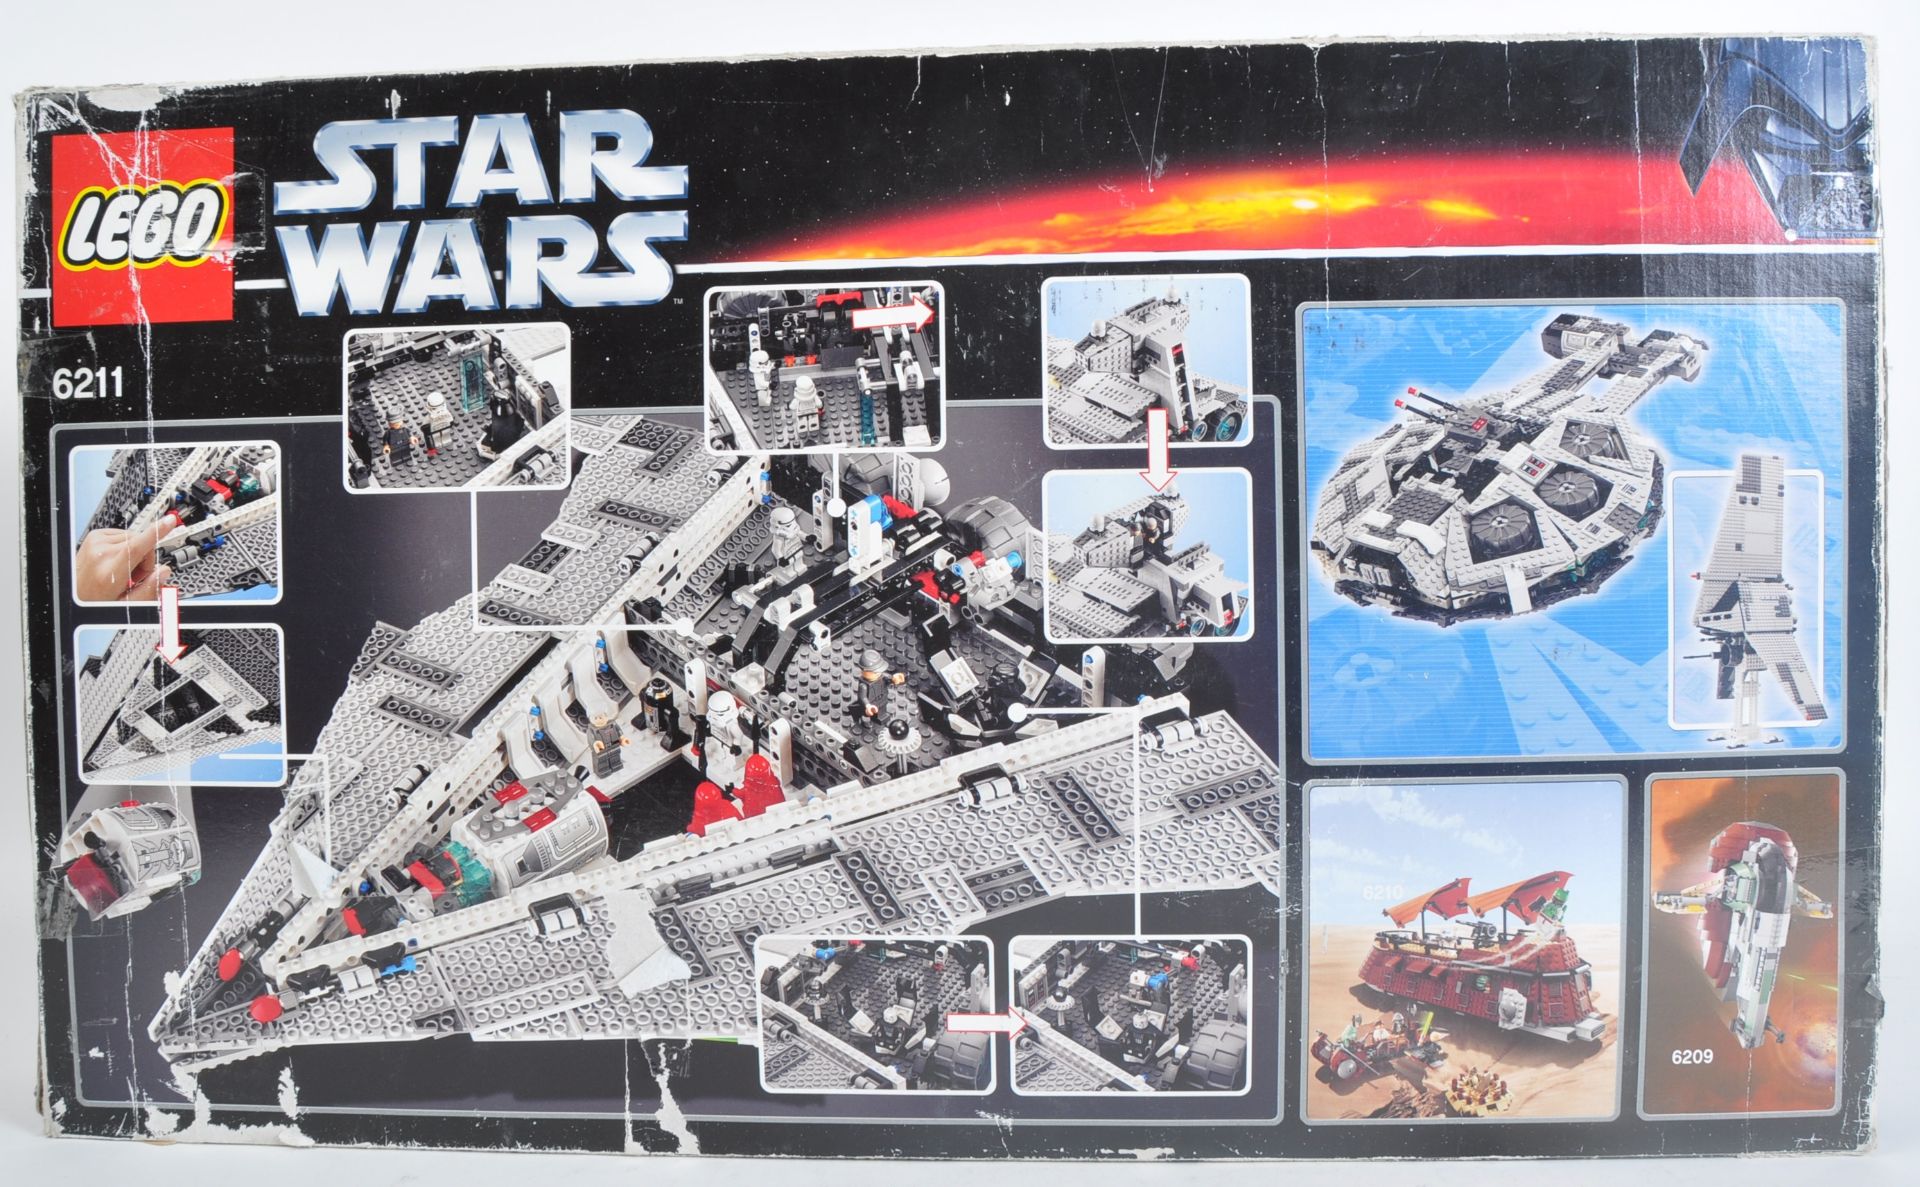 LEGO SET - LEGO STAR WARS - 6211 - IMPERIAL STAR DESTROYER - Image 2 of 4